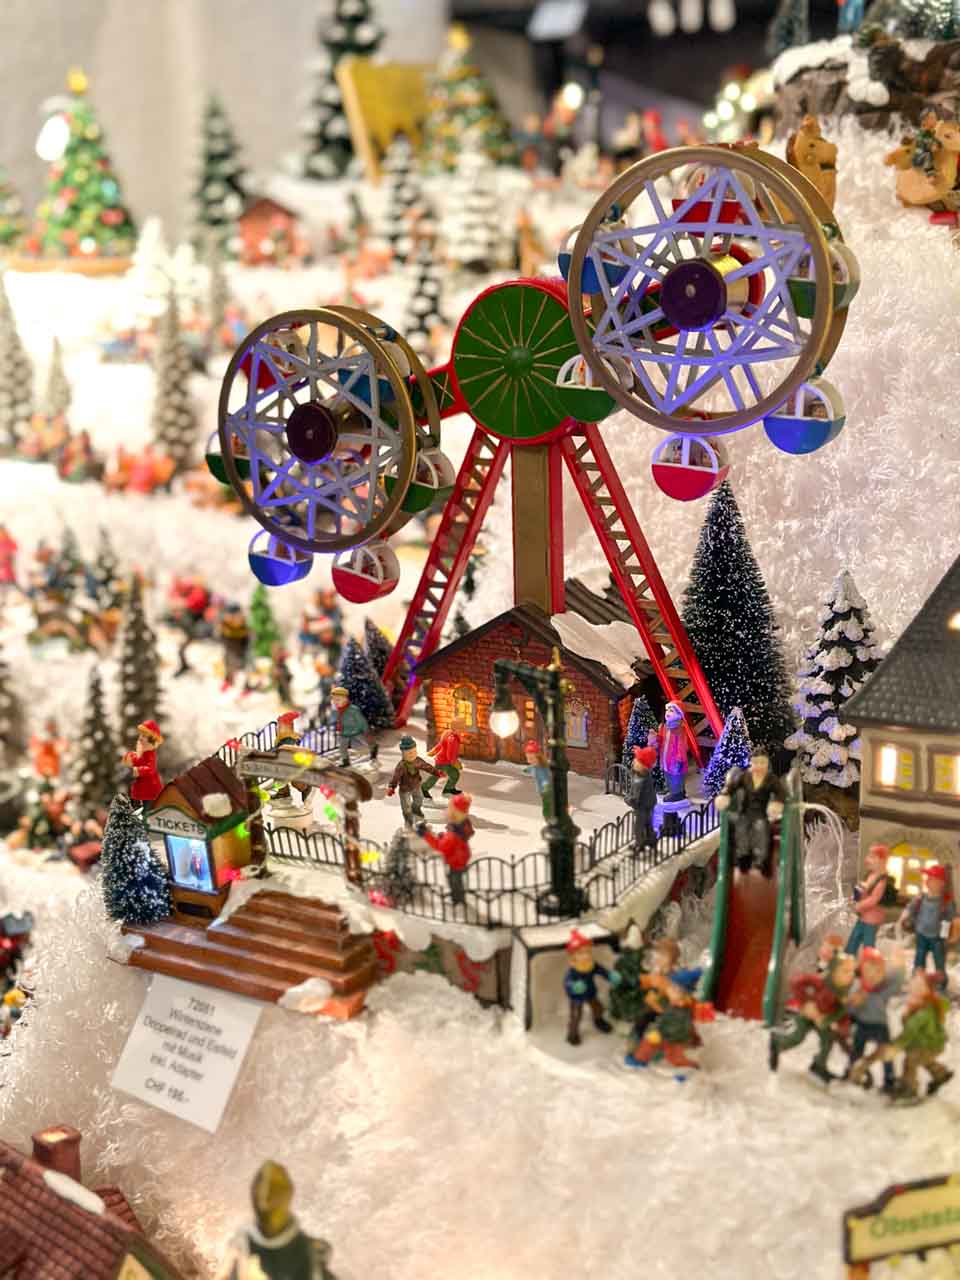 A small, festive fairground model with a spinning Ferris wheel at the Basel Christmas market on Barfüsserplatz